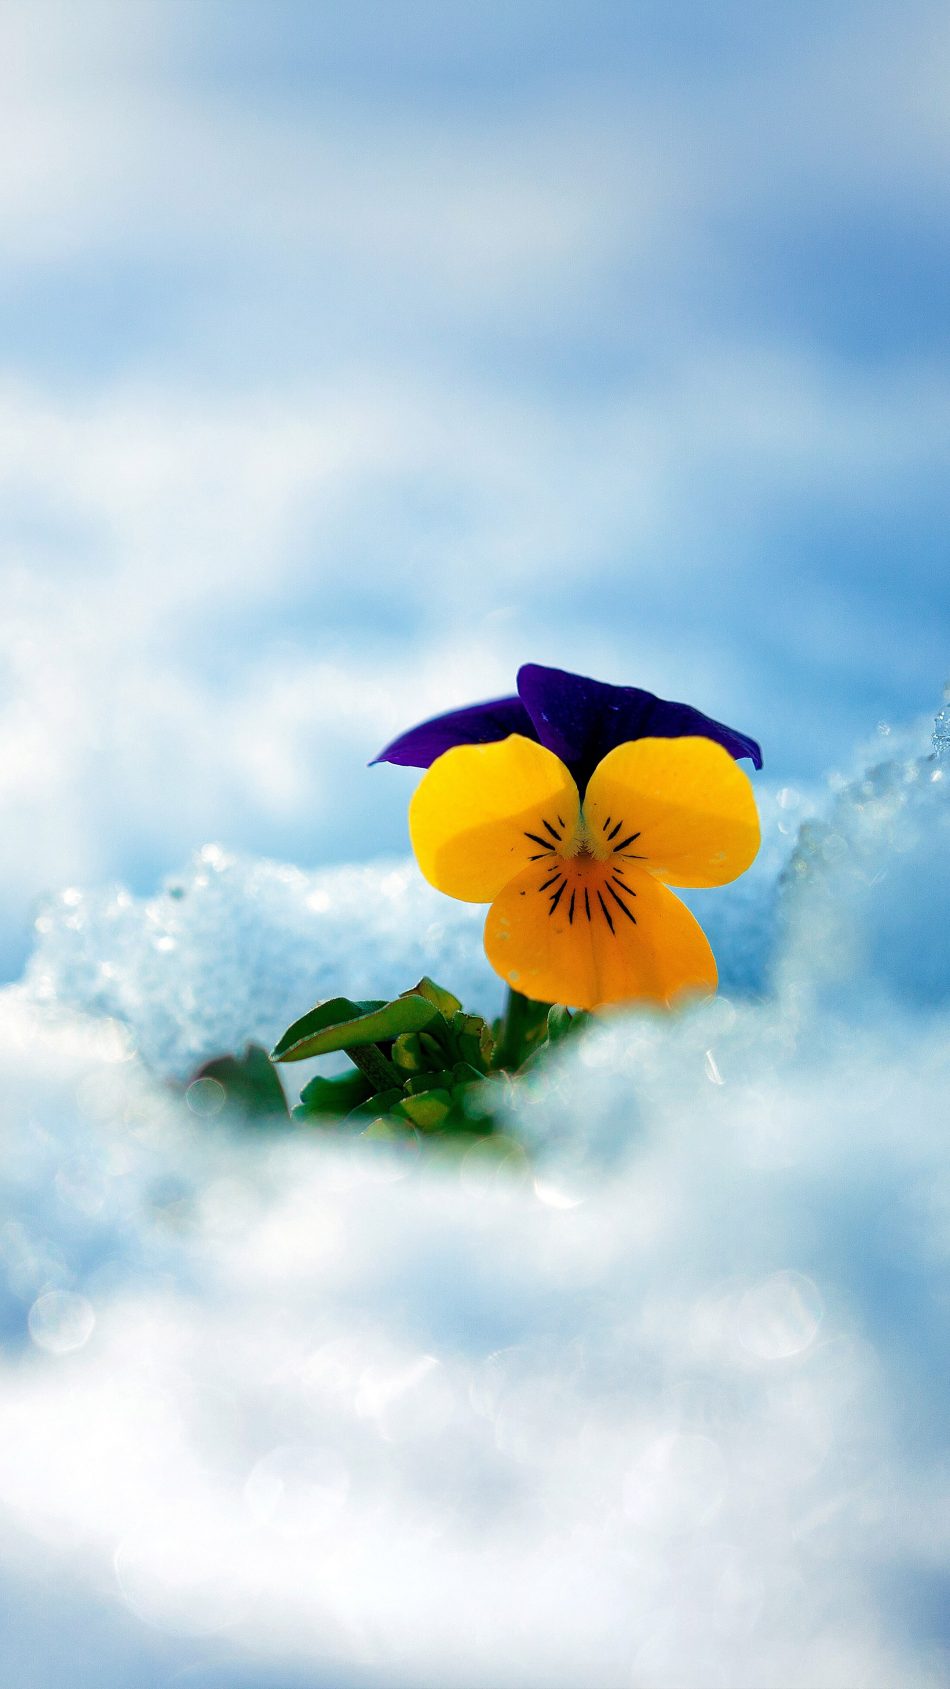 Yellow Flower Winter Snow 4K Ultra HD Mobile Wallpaper